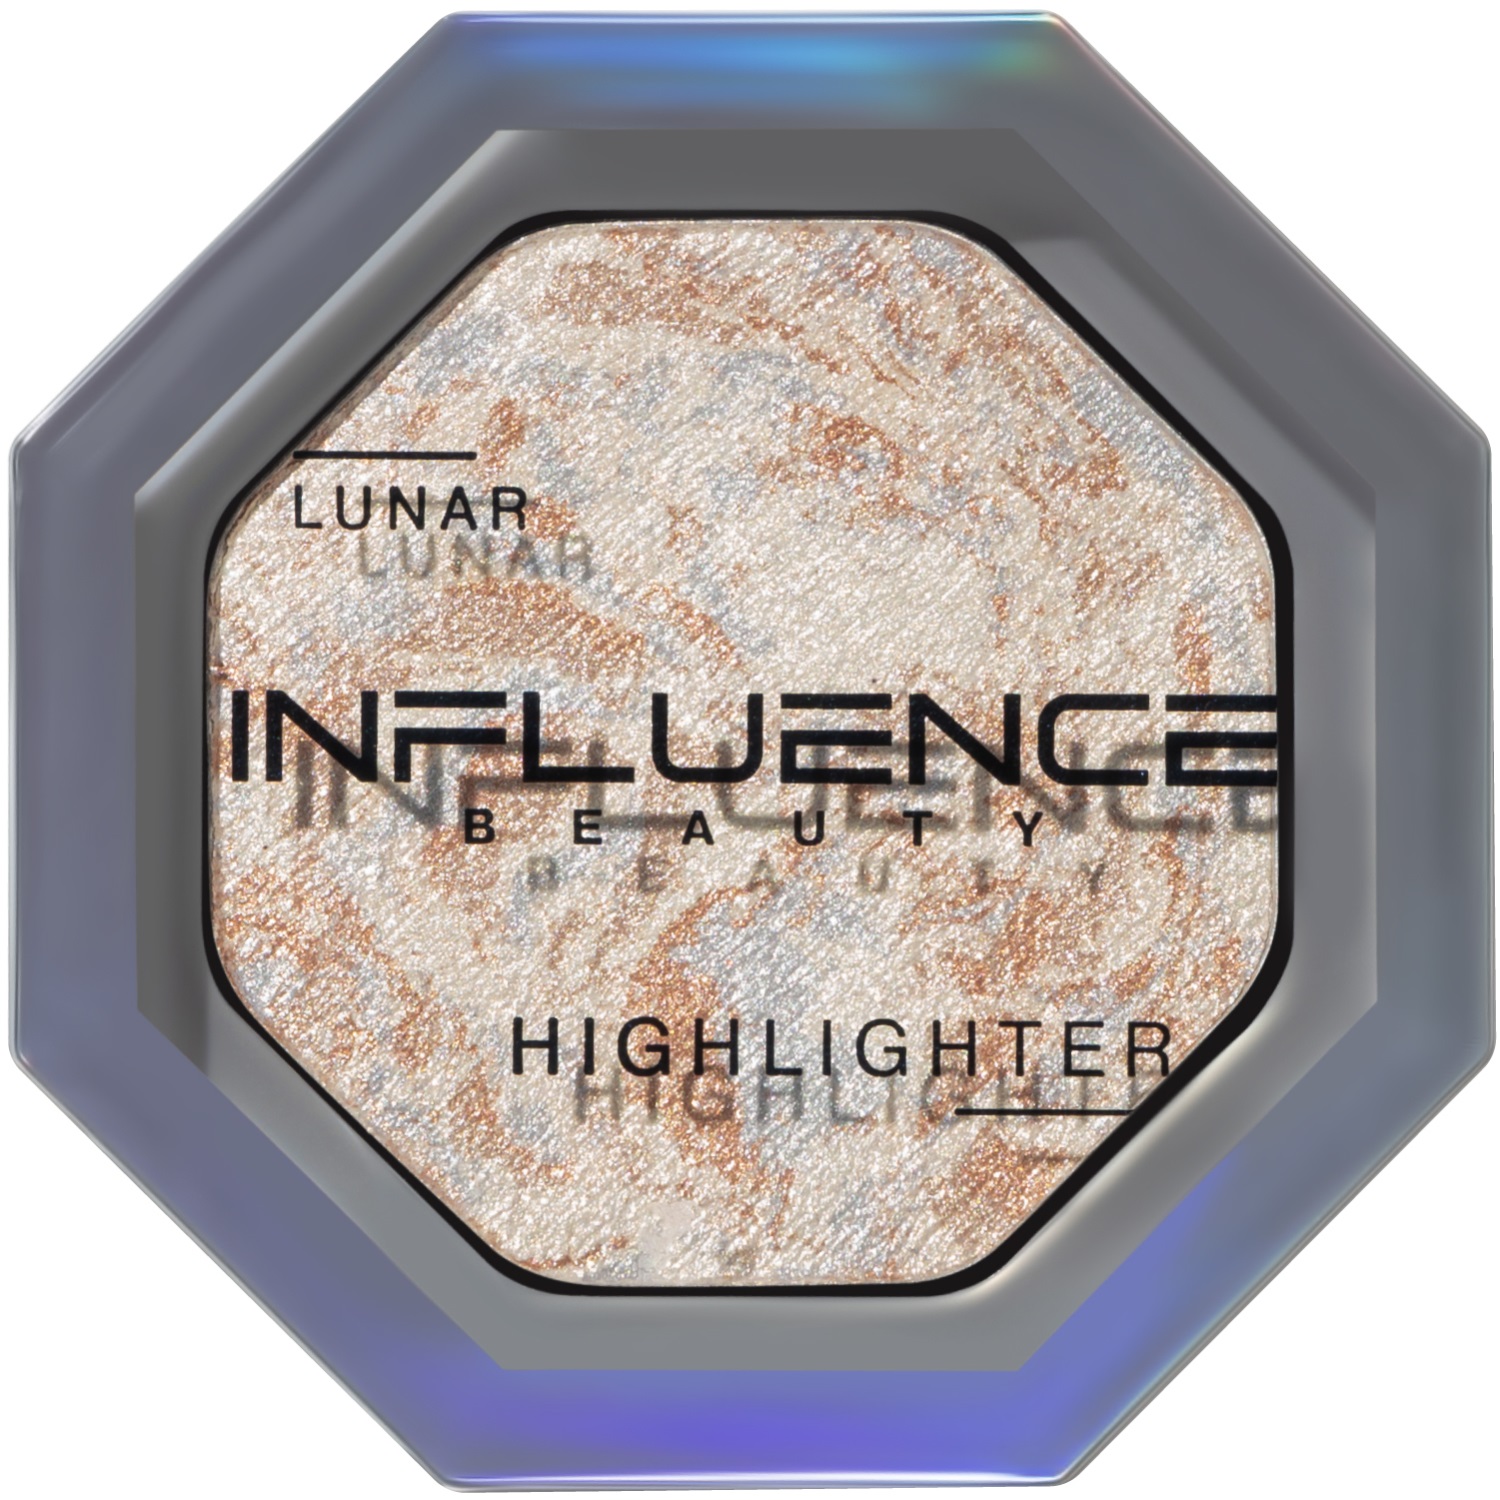 INFLUENCE beauty Хайлайтер Lunar с сияющими частицами, серебряный, 4,8 г (INFLUENCE beauty, Лицо)